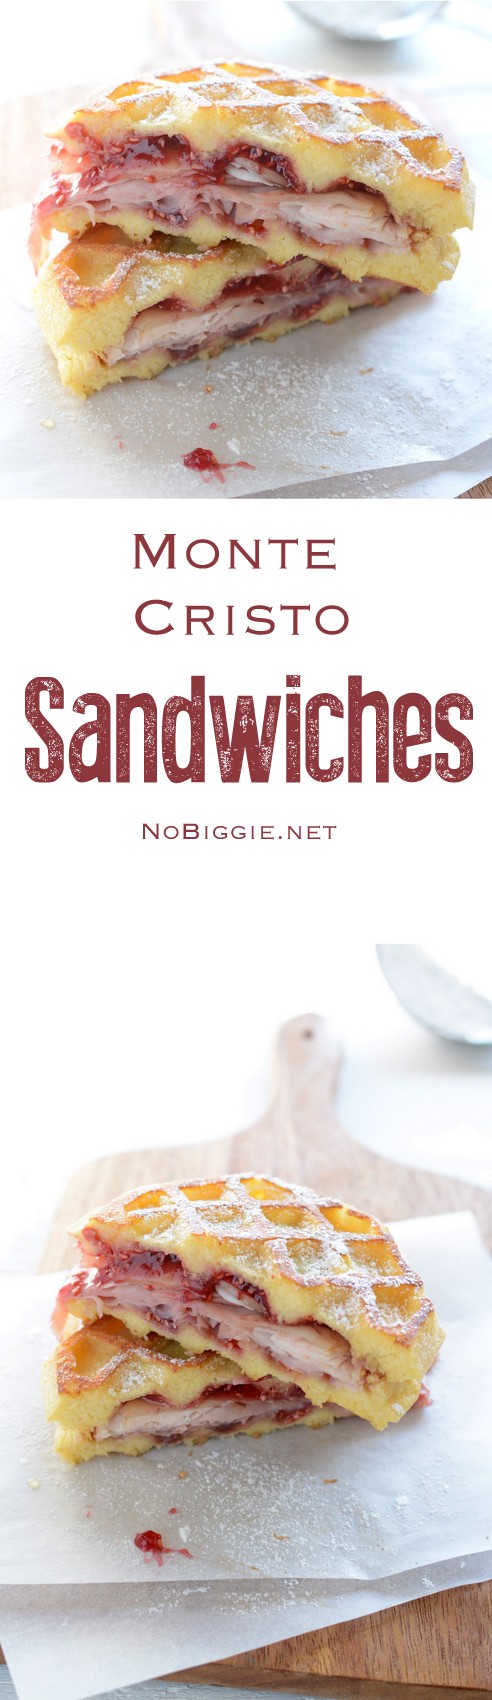 http://www.nobiggie.net/wp-content/uploads/2016/03/Monte-Cristo-Sandwiches-the-closest-at-home-version-to-Disneyland.jpg